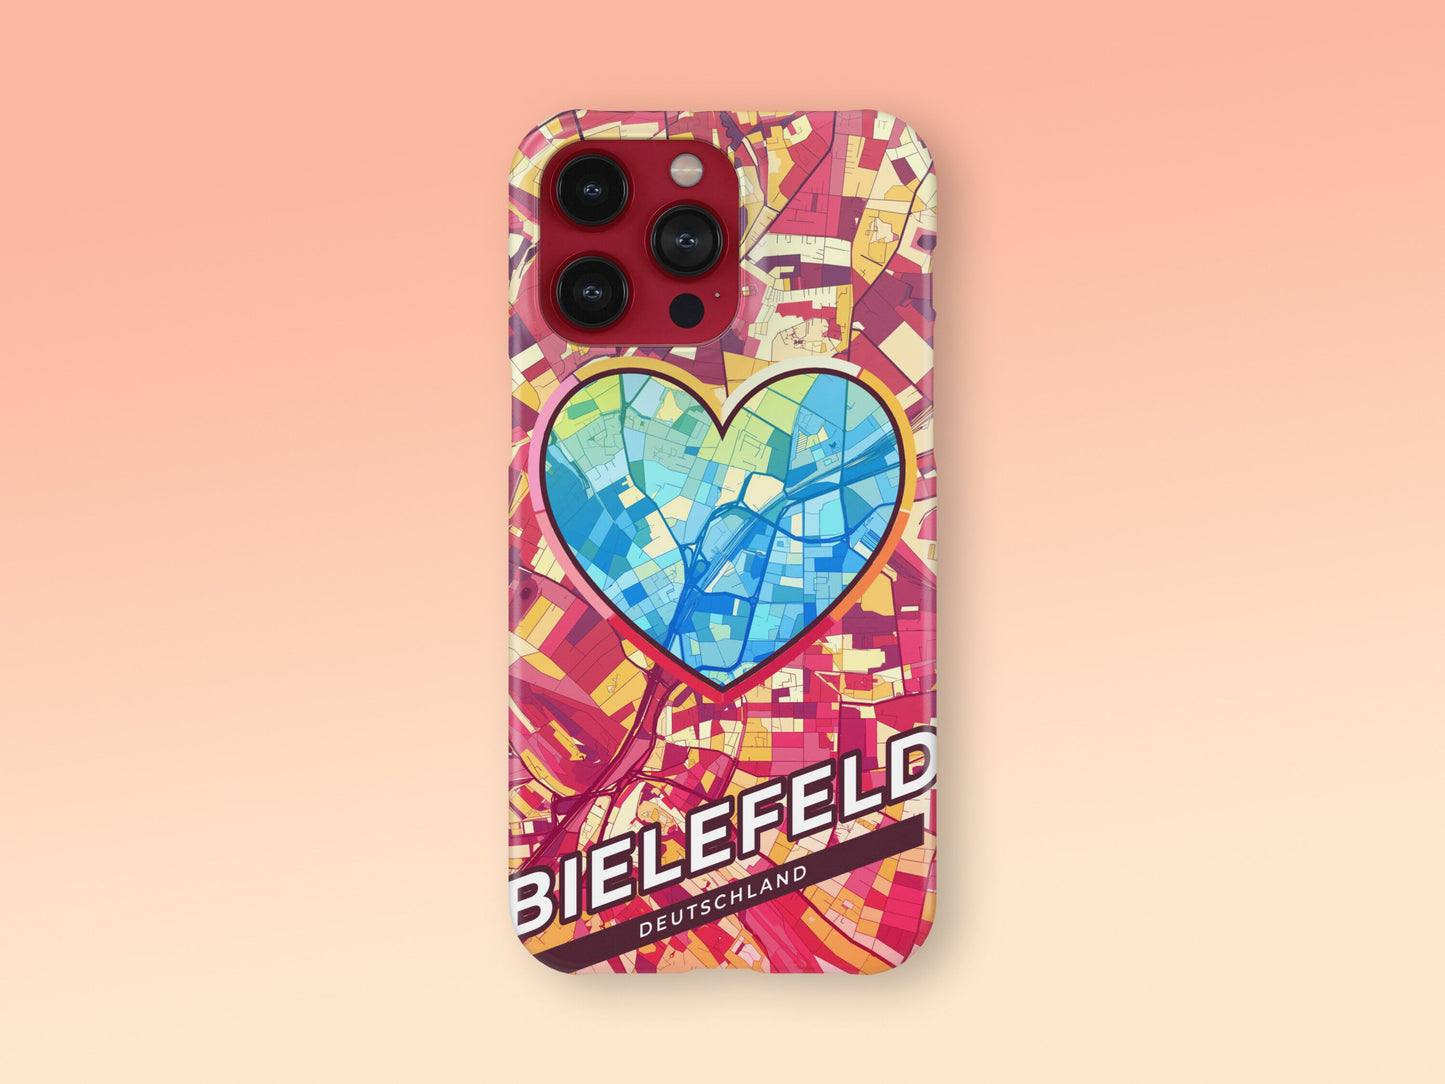 Bielefeld Deutschland slim phone case with colorful icon. Birthday, wedding or housewarming gift. Couple match cases. 2